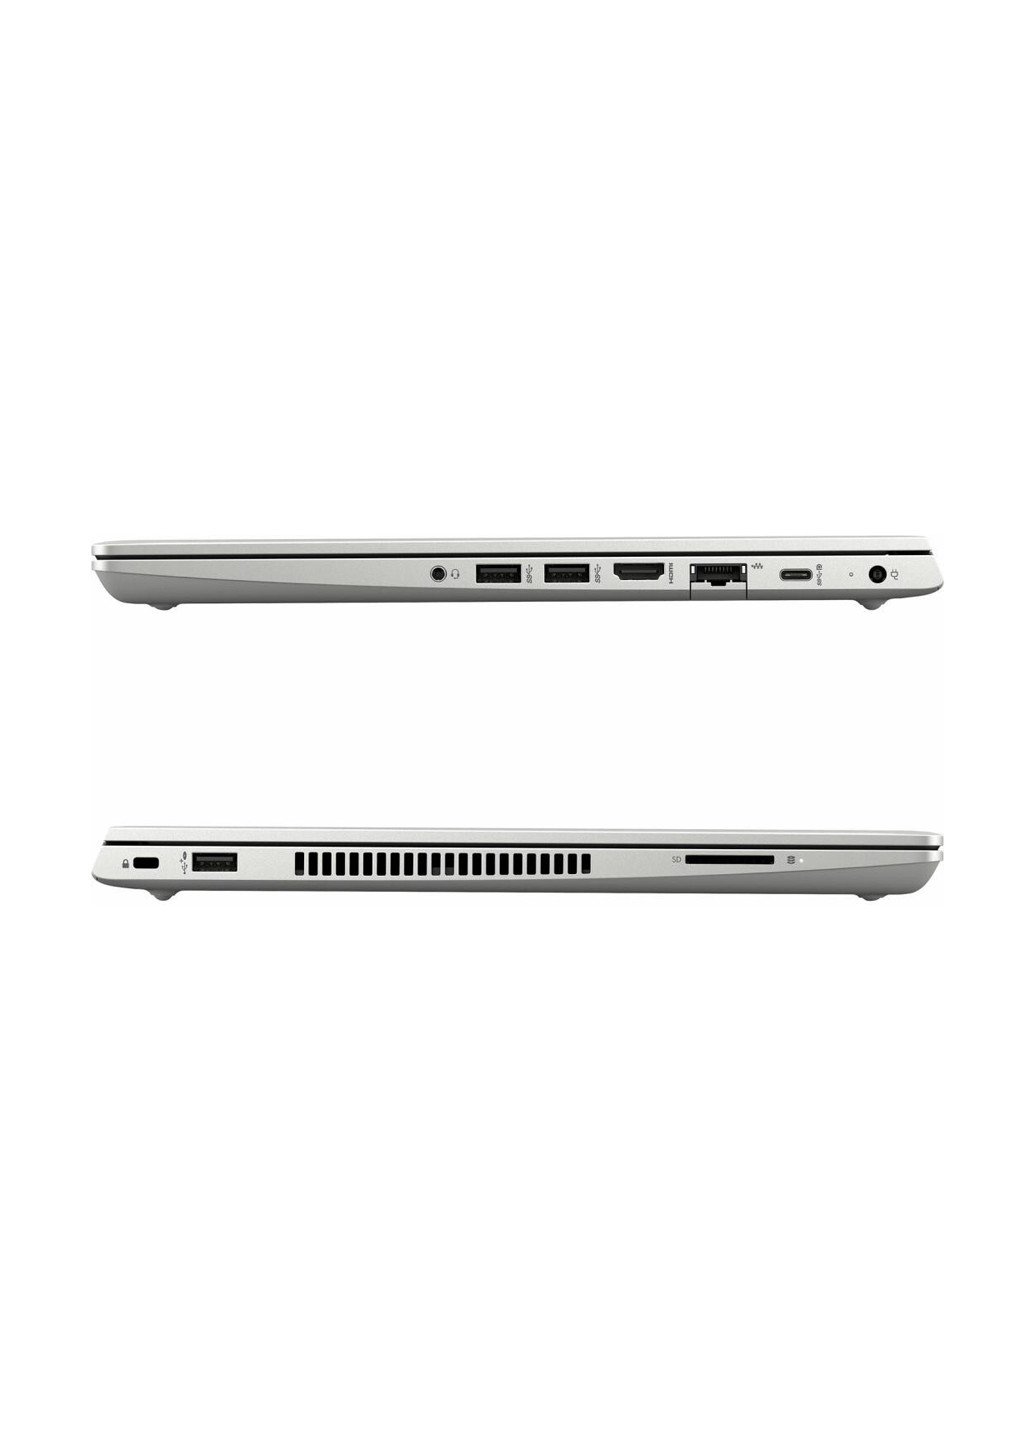 Ноутбук HP probook 440 g5 (2sz73av) silver (158838106)